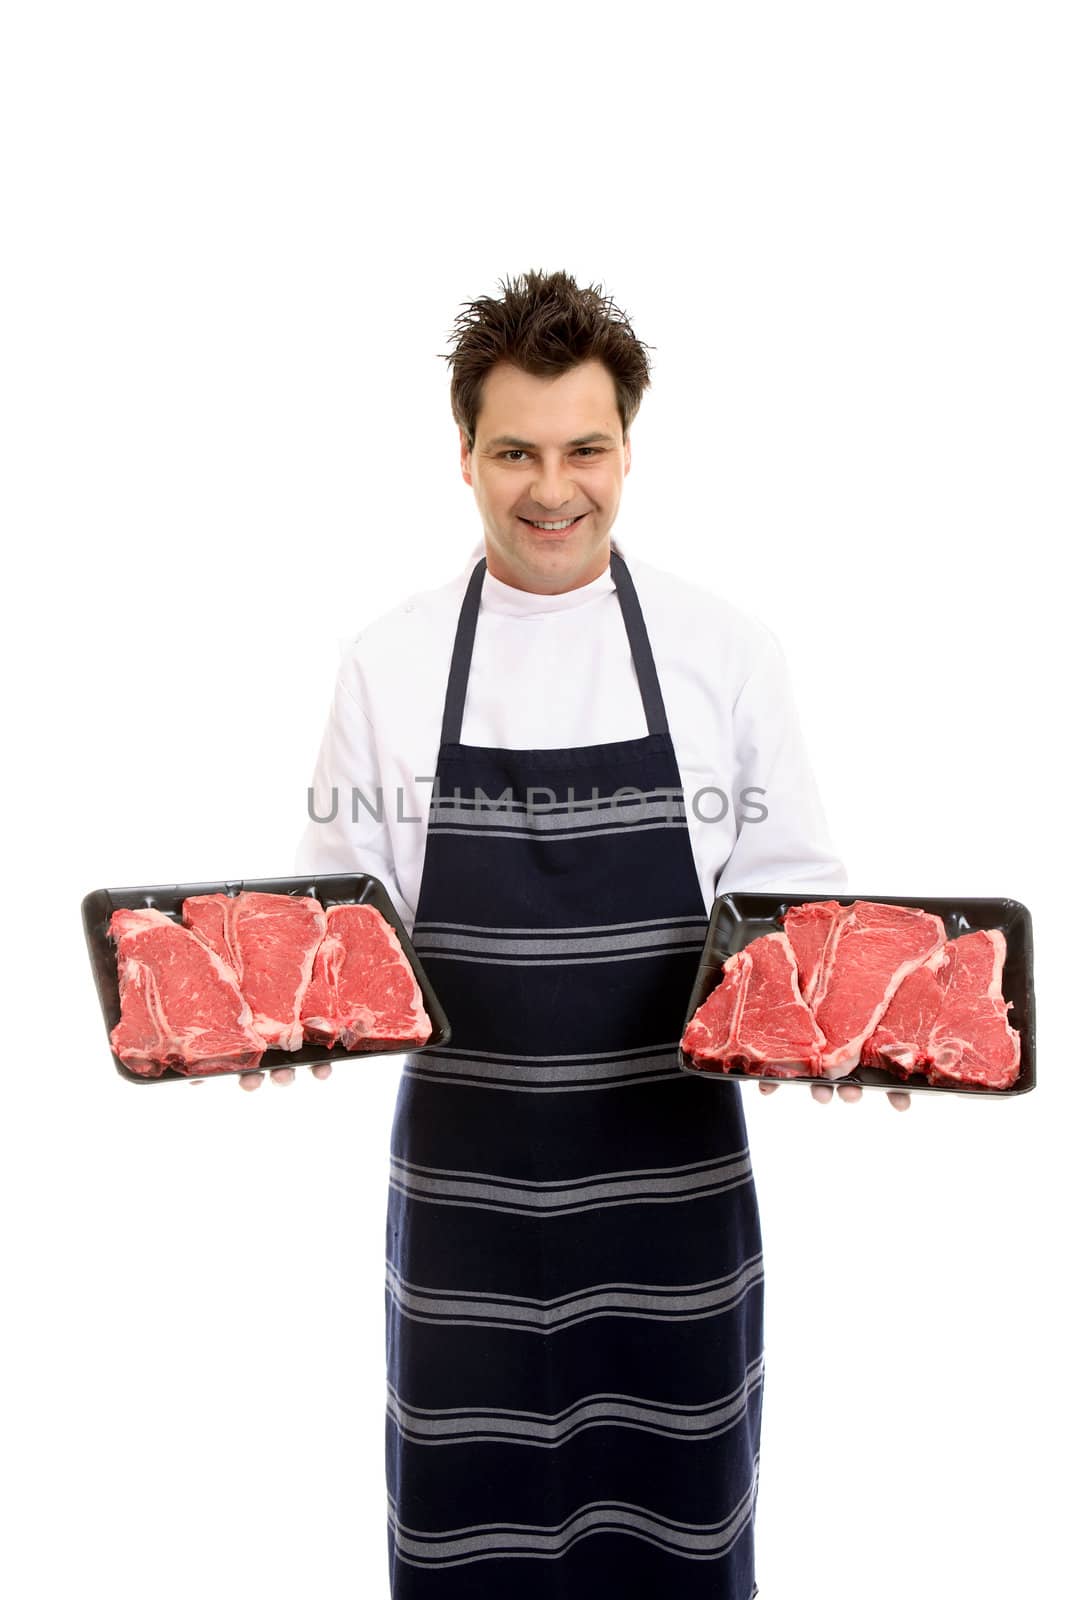 Butcher holding two trays of t-bone steak.